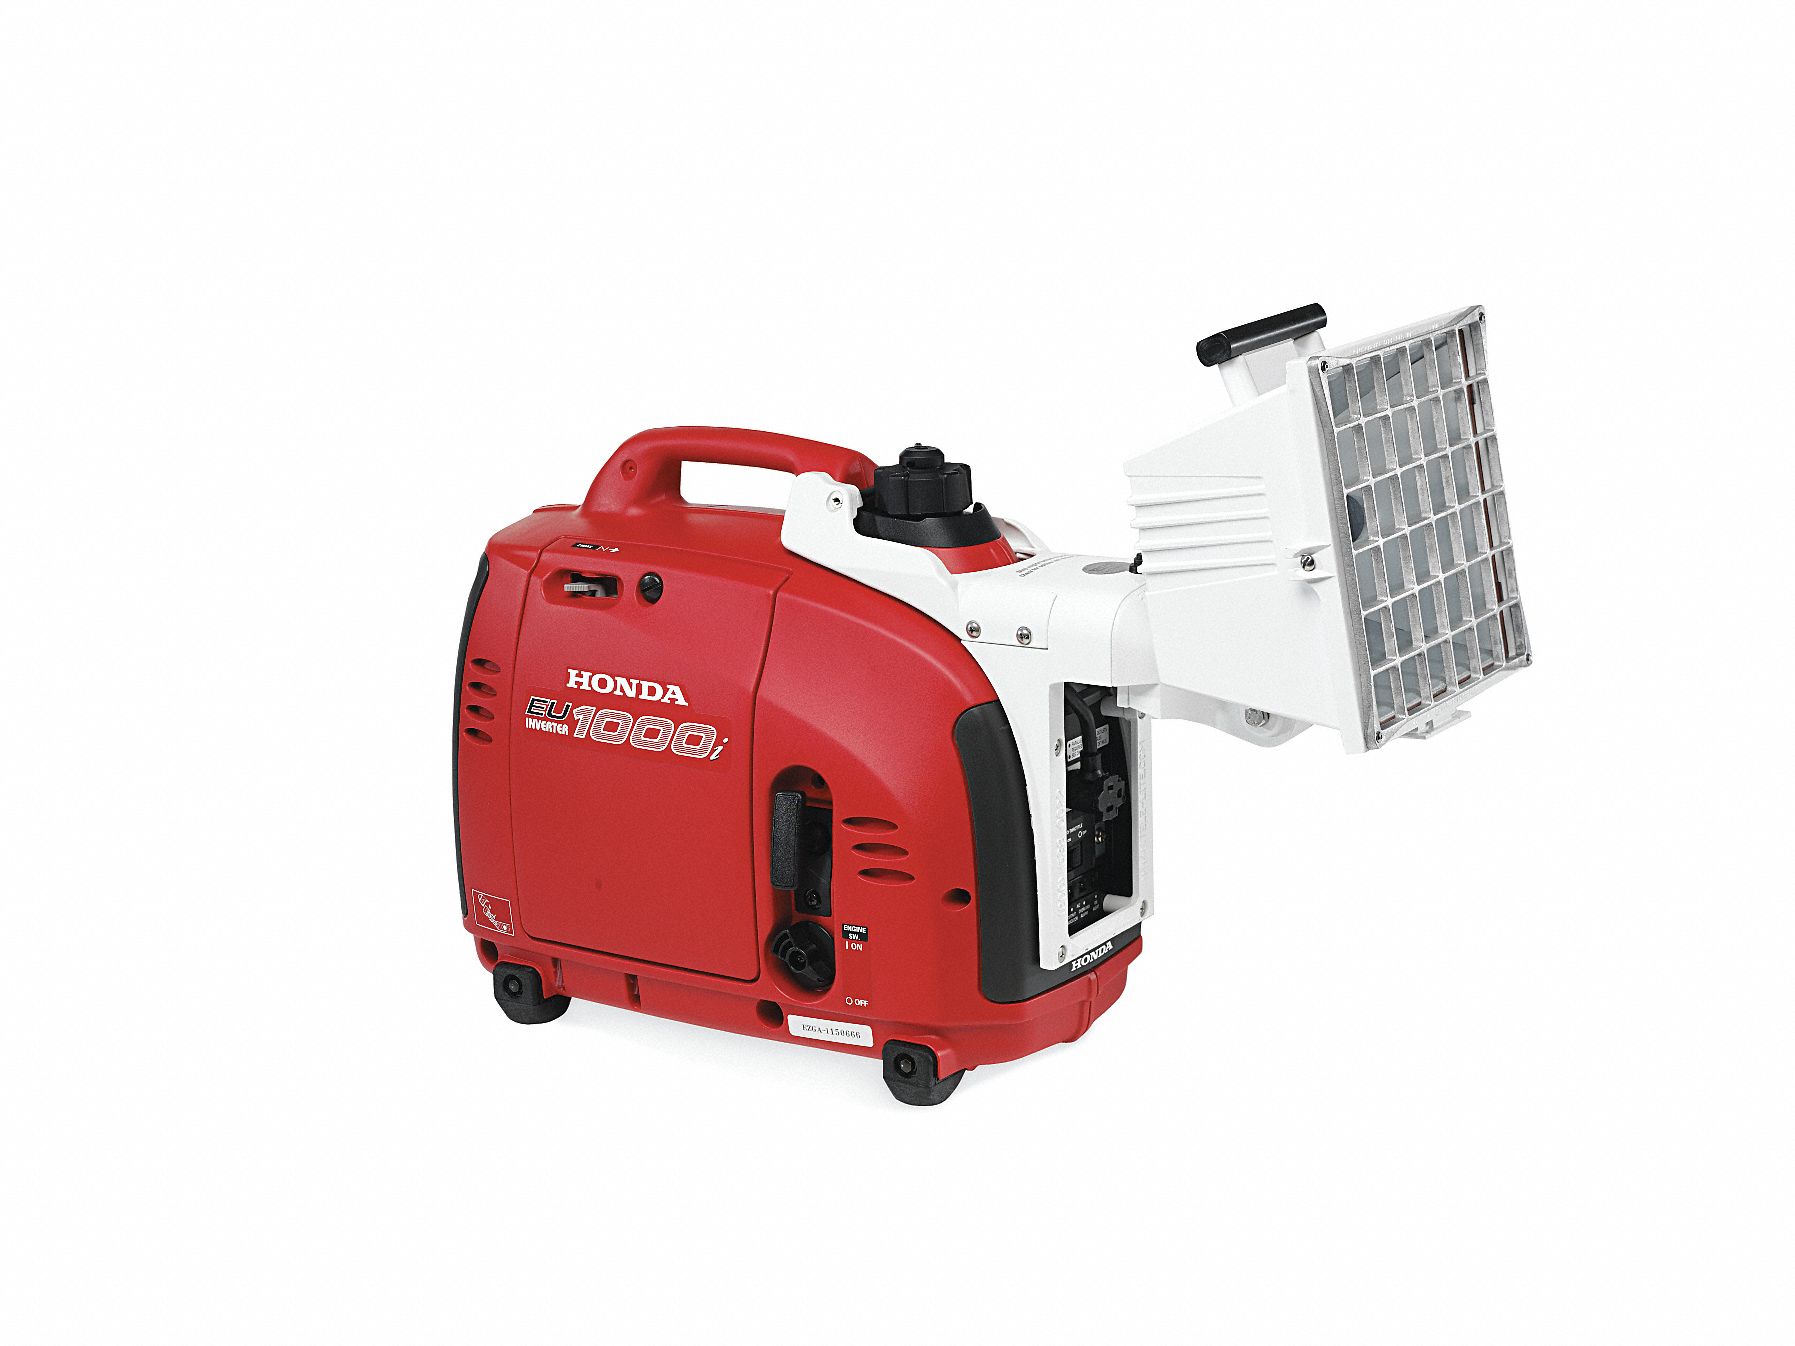 Portable honda generator with light #5